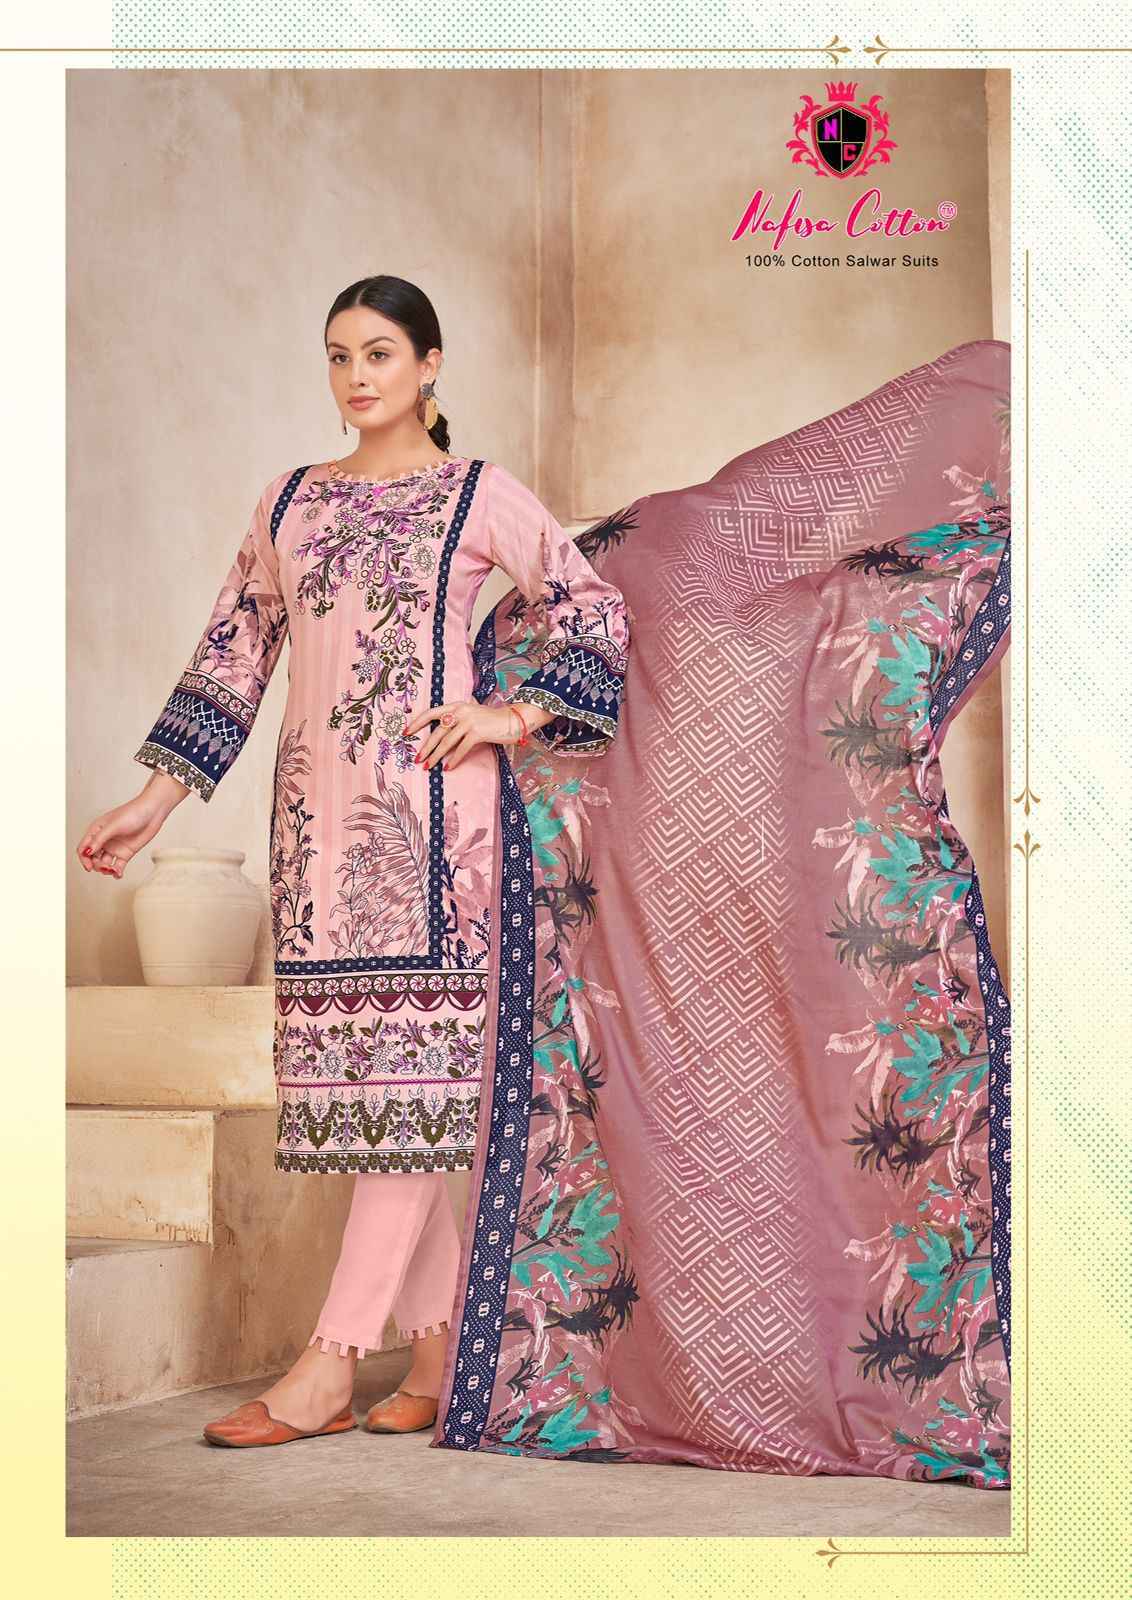 Mayur Bandhani Special Vol-18 Surat wholesale dress material market online  shopping